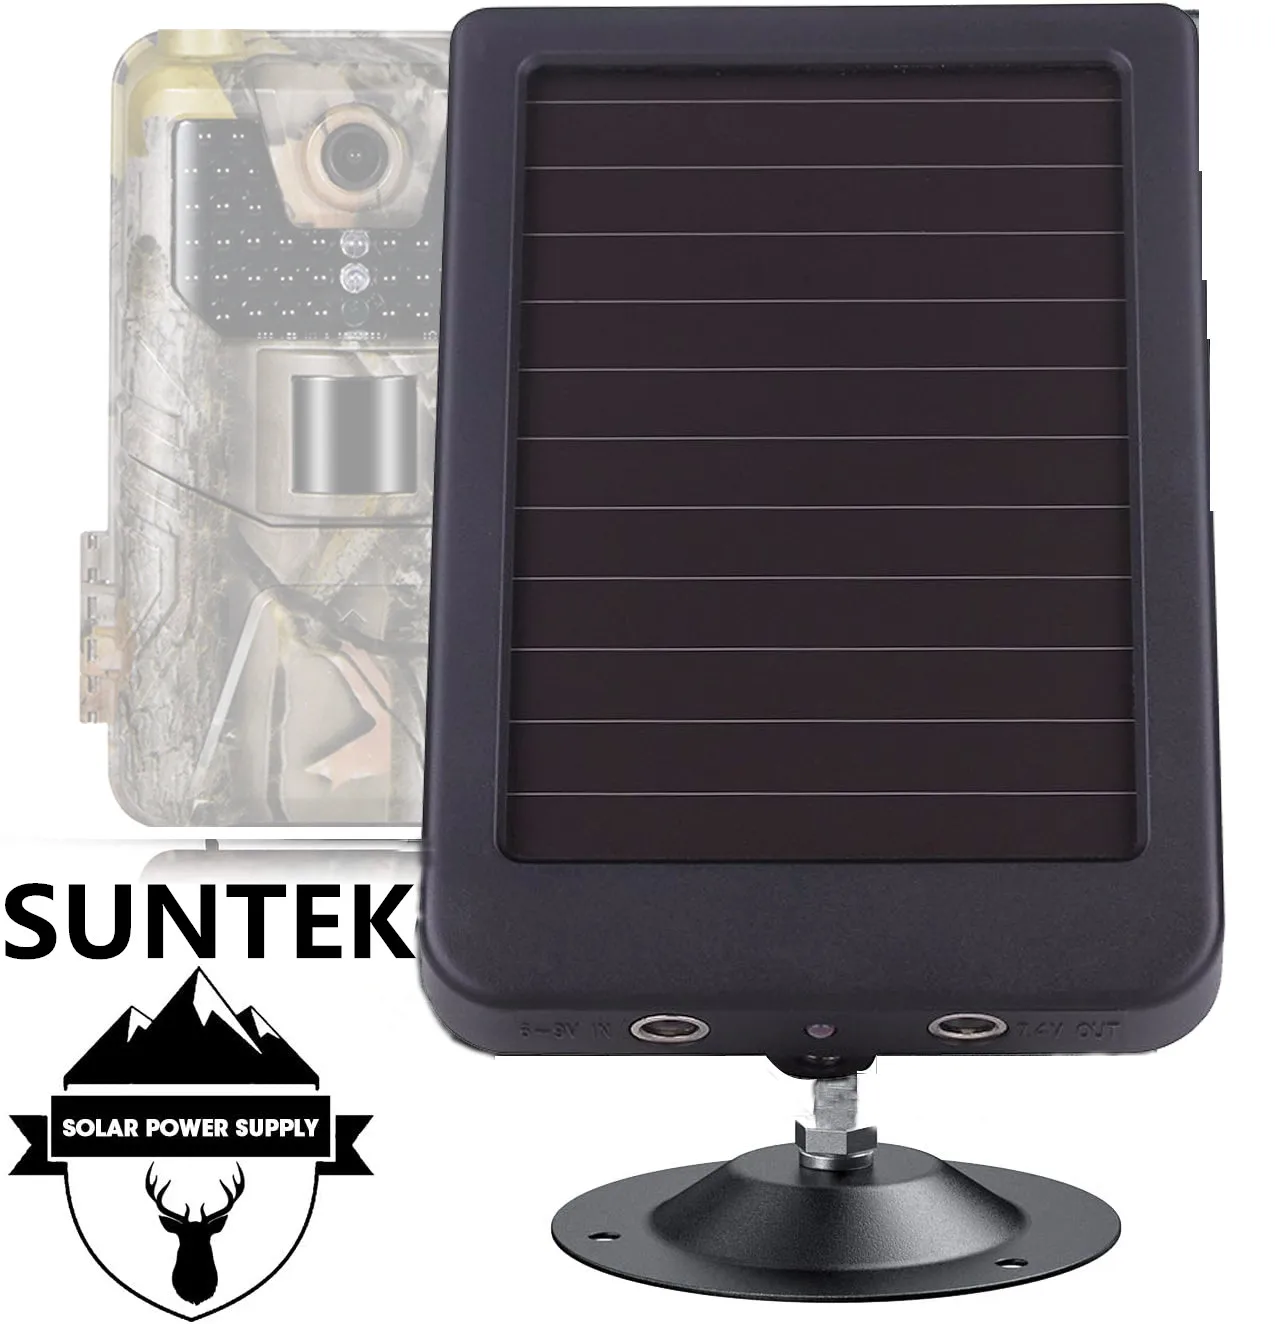 Outdoor Solar Panel 3000mah 9V Solar Power Supply Charger Battery for  Suntek HC300 HC500 HC700  HC801 HC-900 Trail Cameras